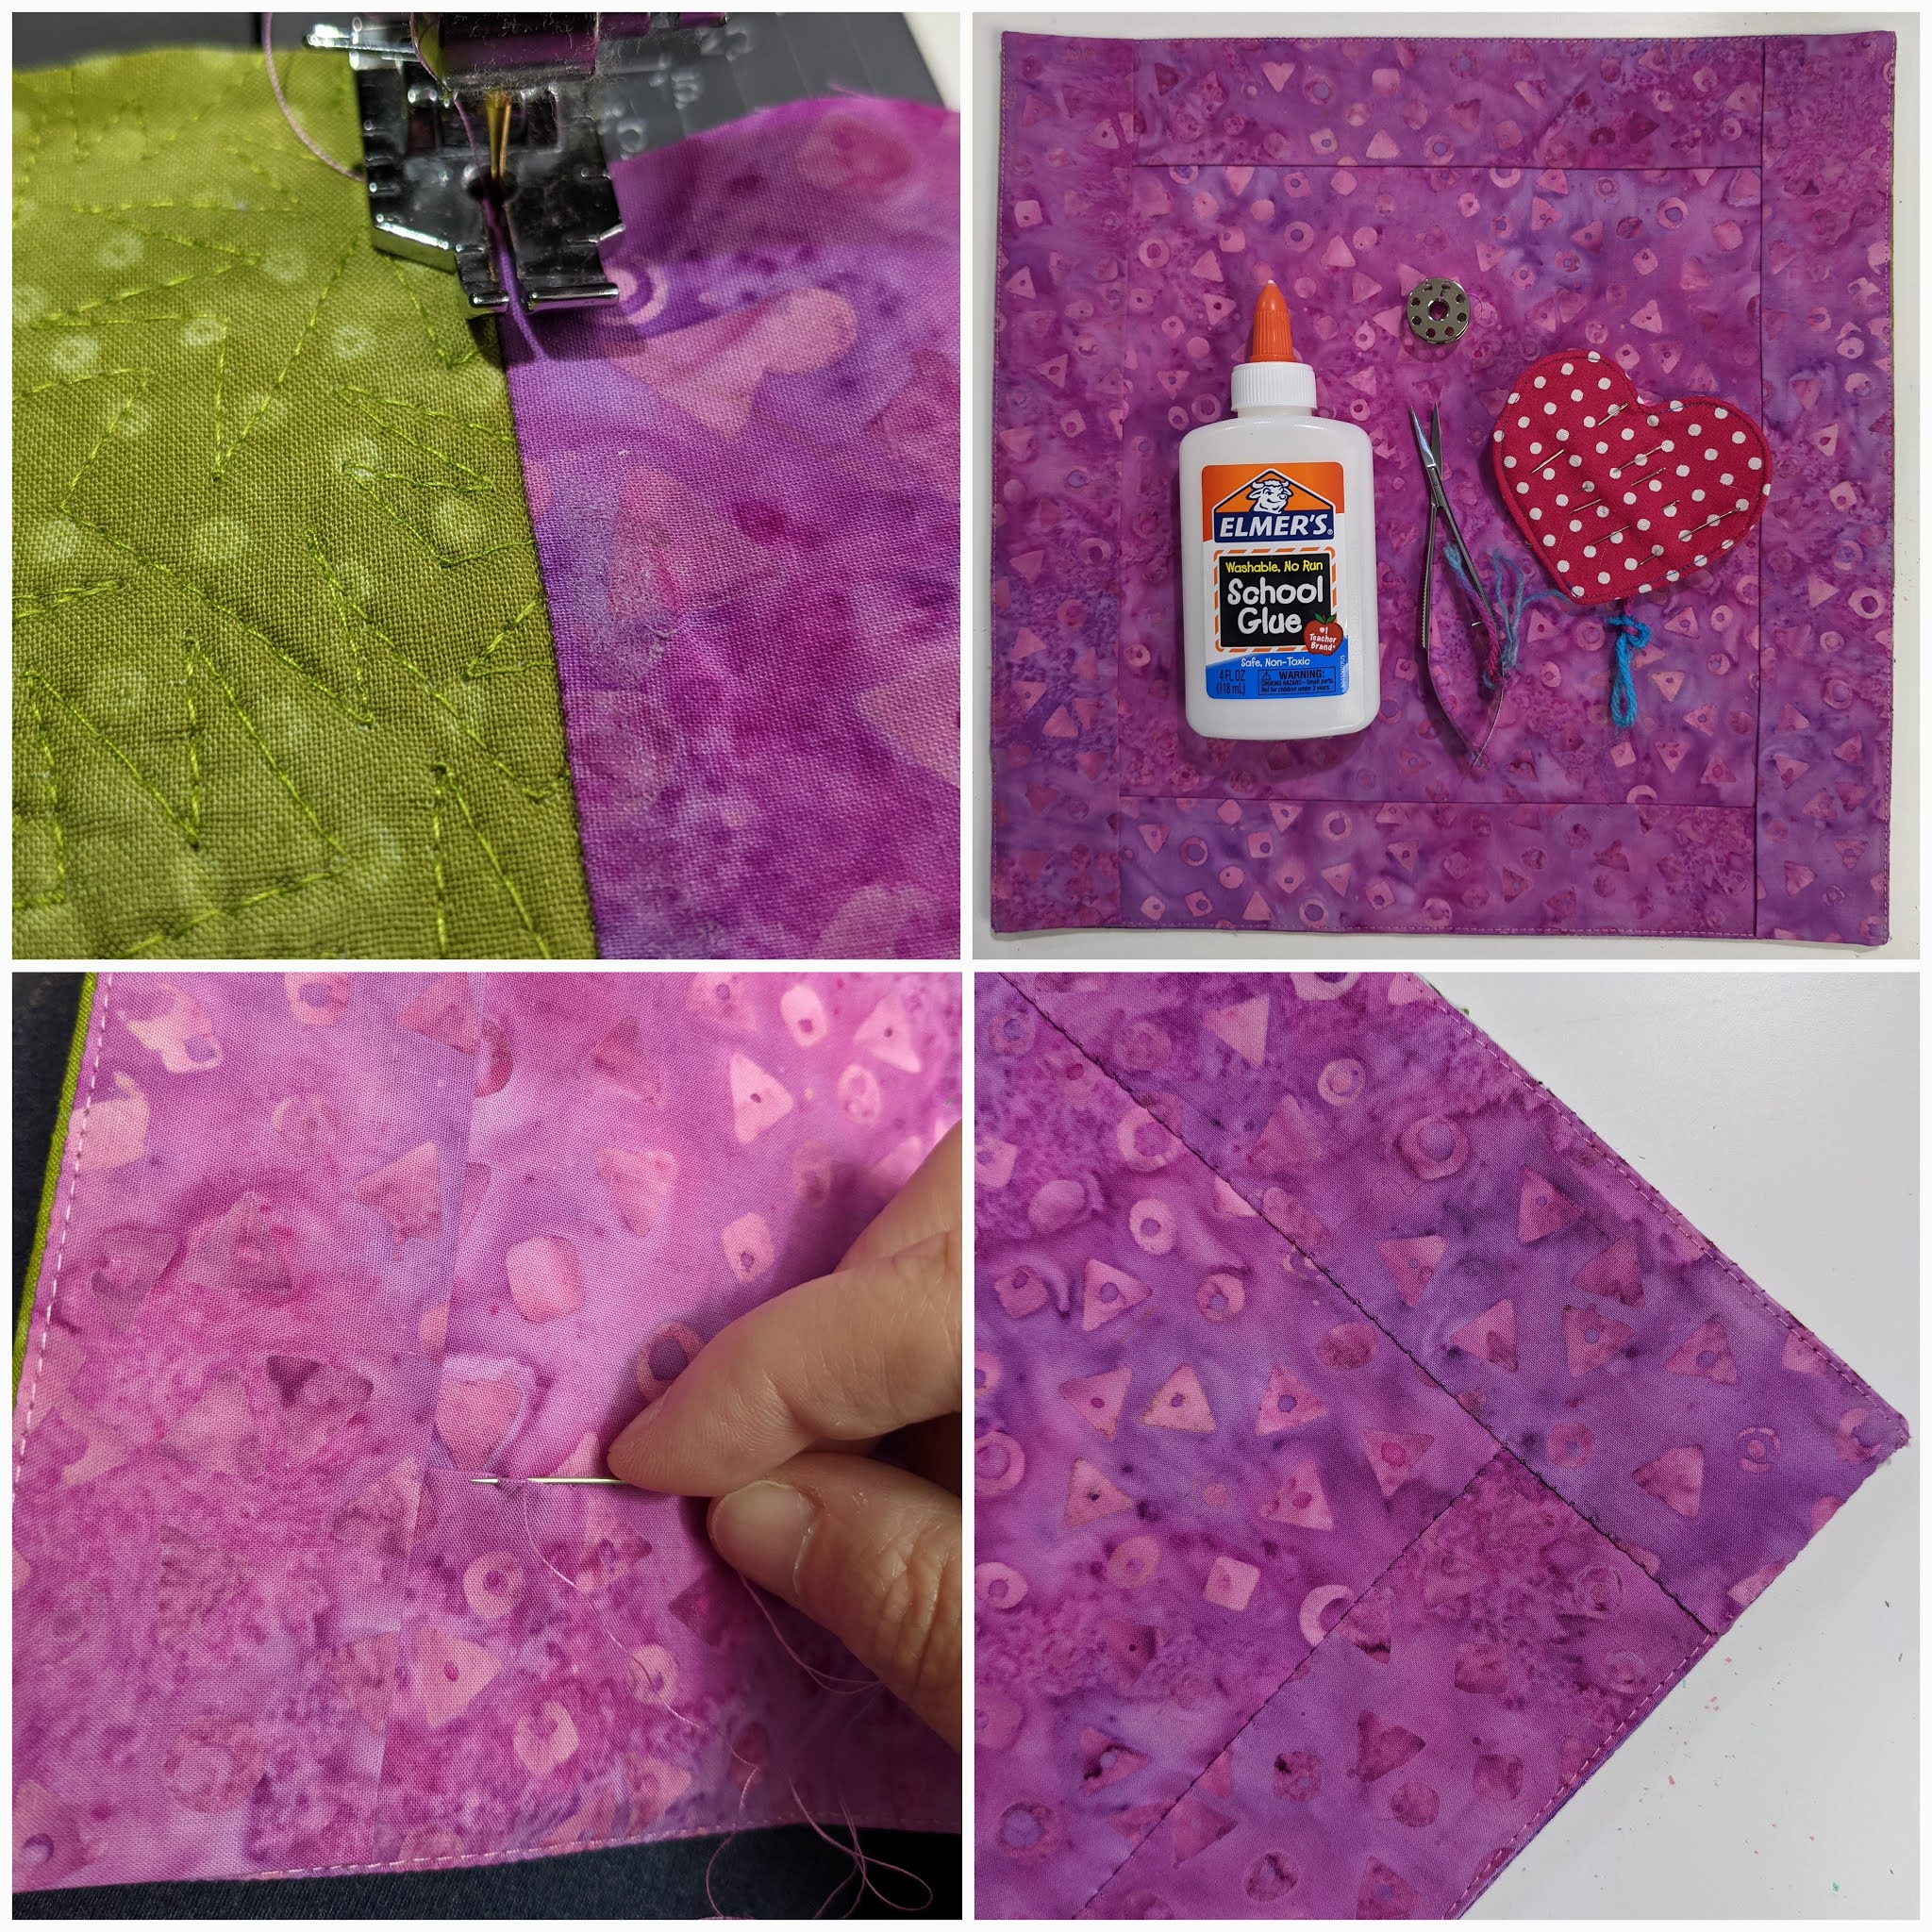 Elmer's Washable School Glue - Purple Daisies Quilting